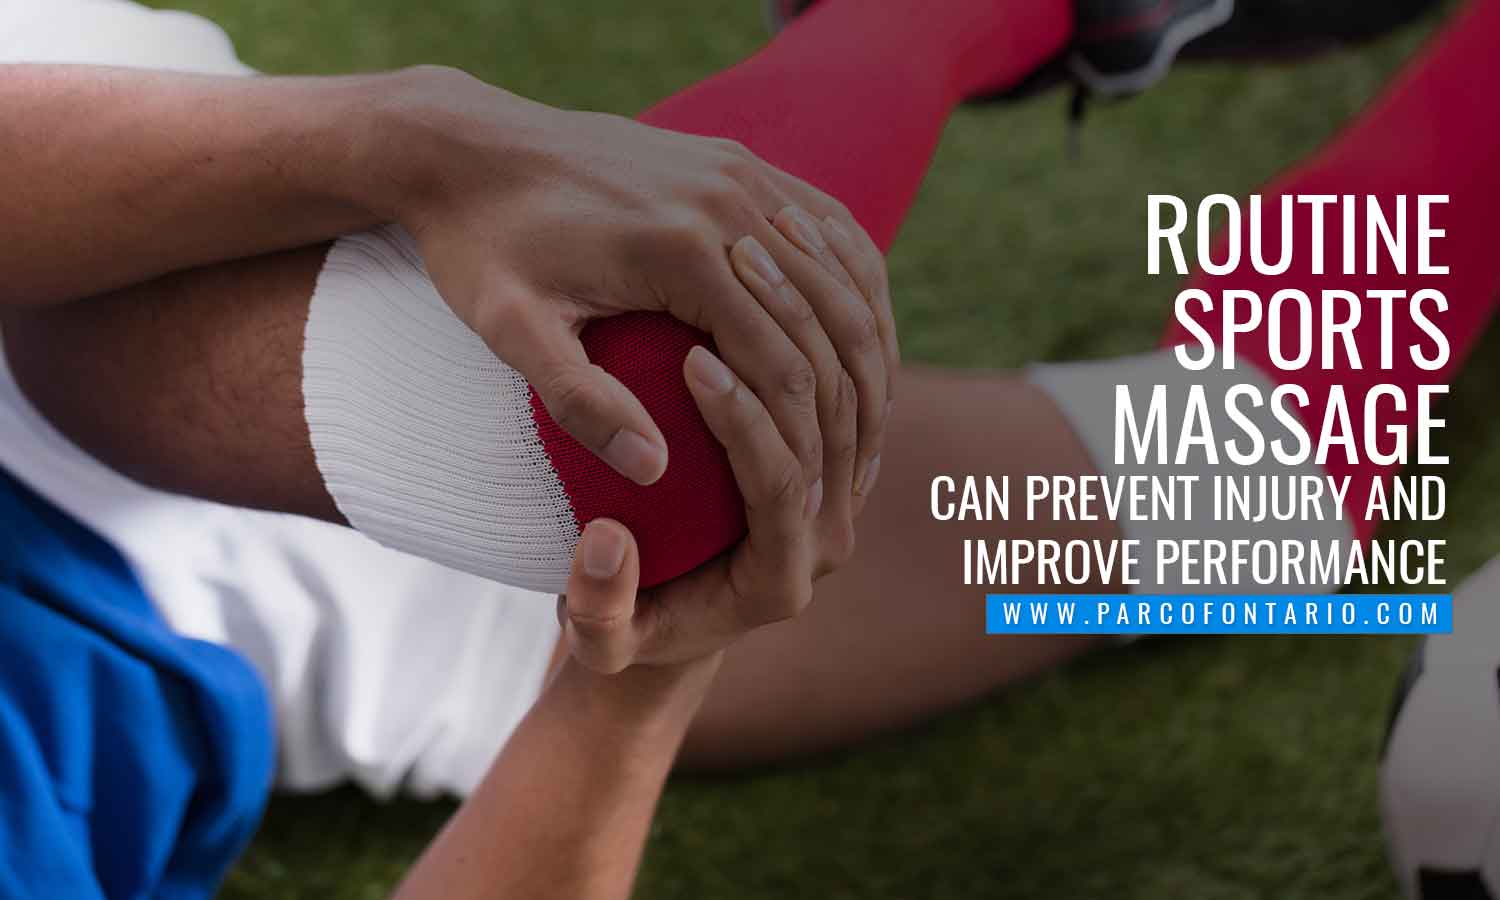 Routine sports massage can prevent injury